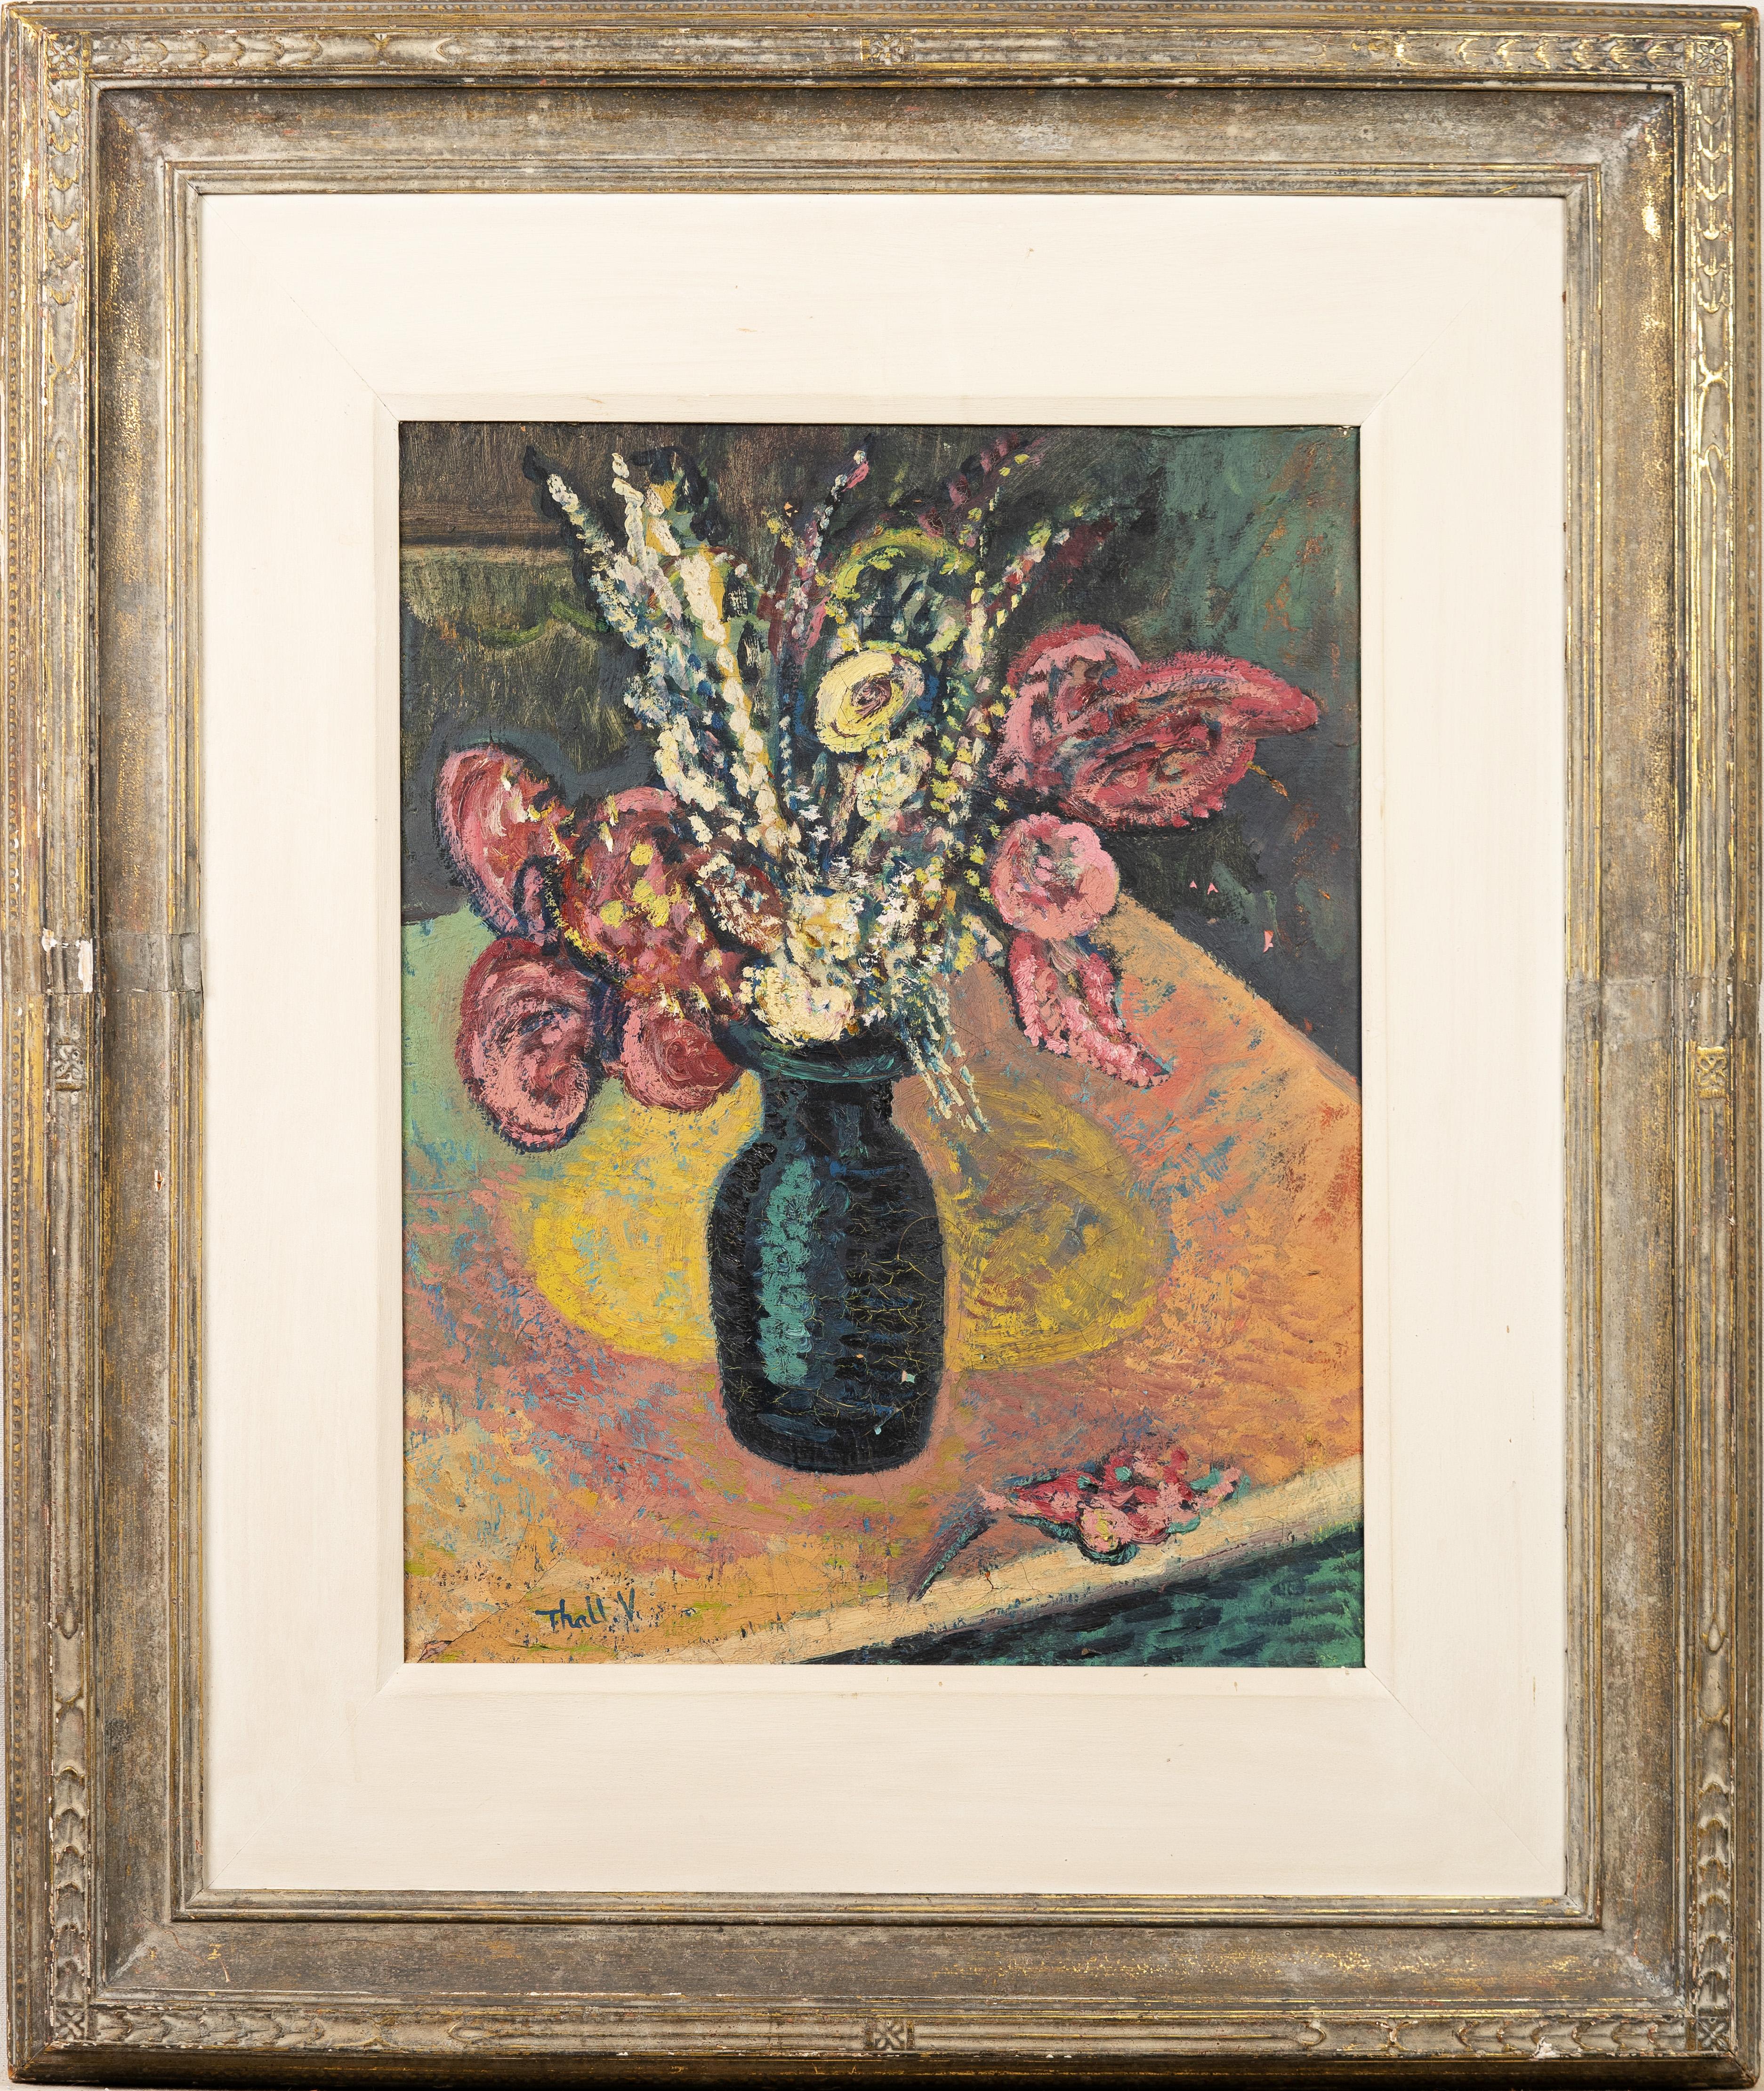 Abstract Painting Victor Thall - Peinture à l'huile post-impressionniste, grande nature morte rose moderne, encadrée